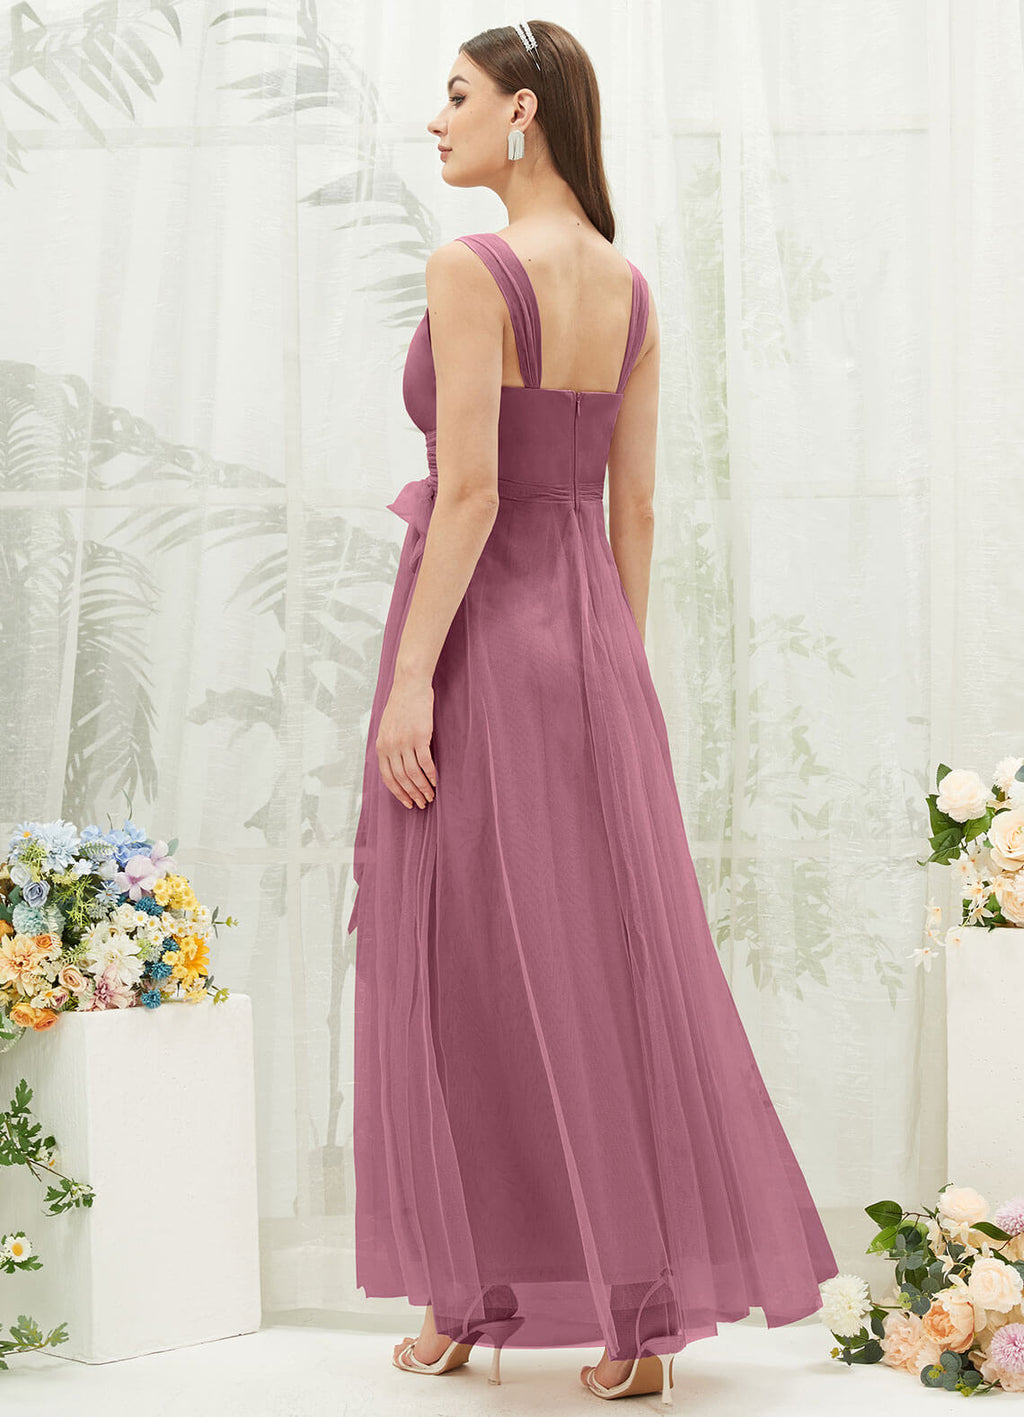 NZ Bridal Dusty Rose Straps Tulle Floor Length bridesmaid dresses 07303ep Yedda a